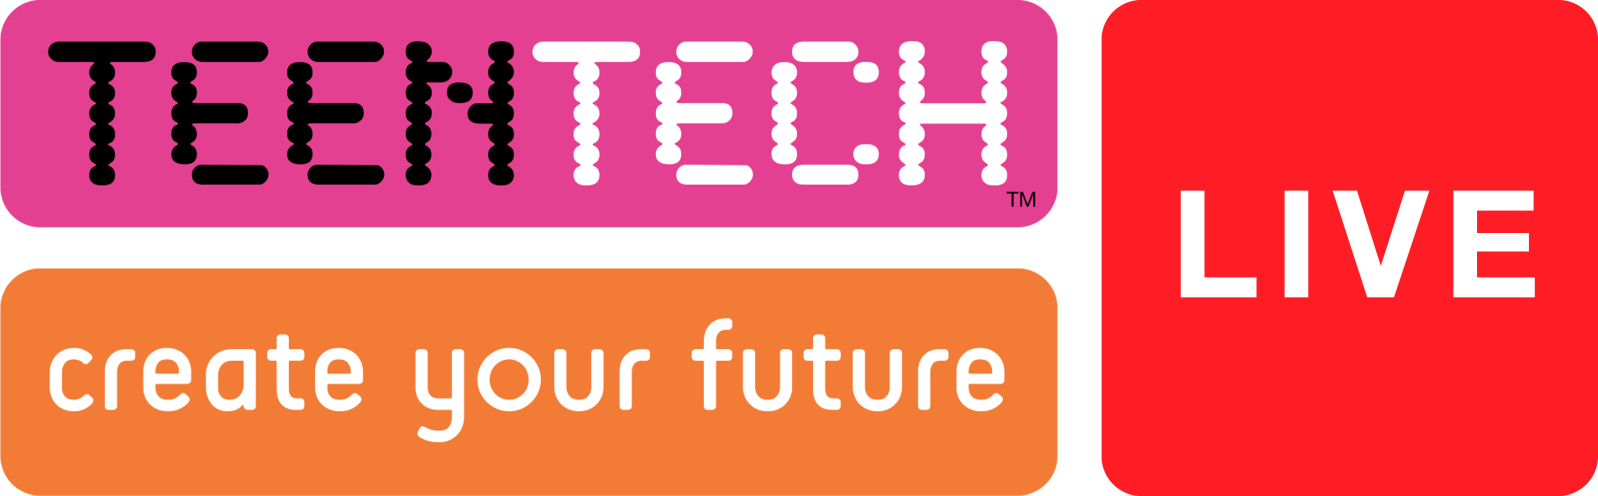 TeenTech Create Your Future Live